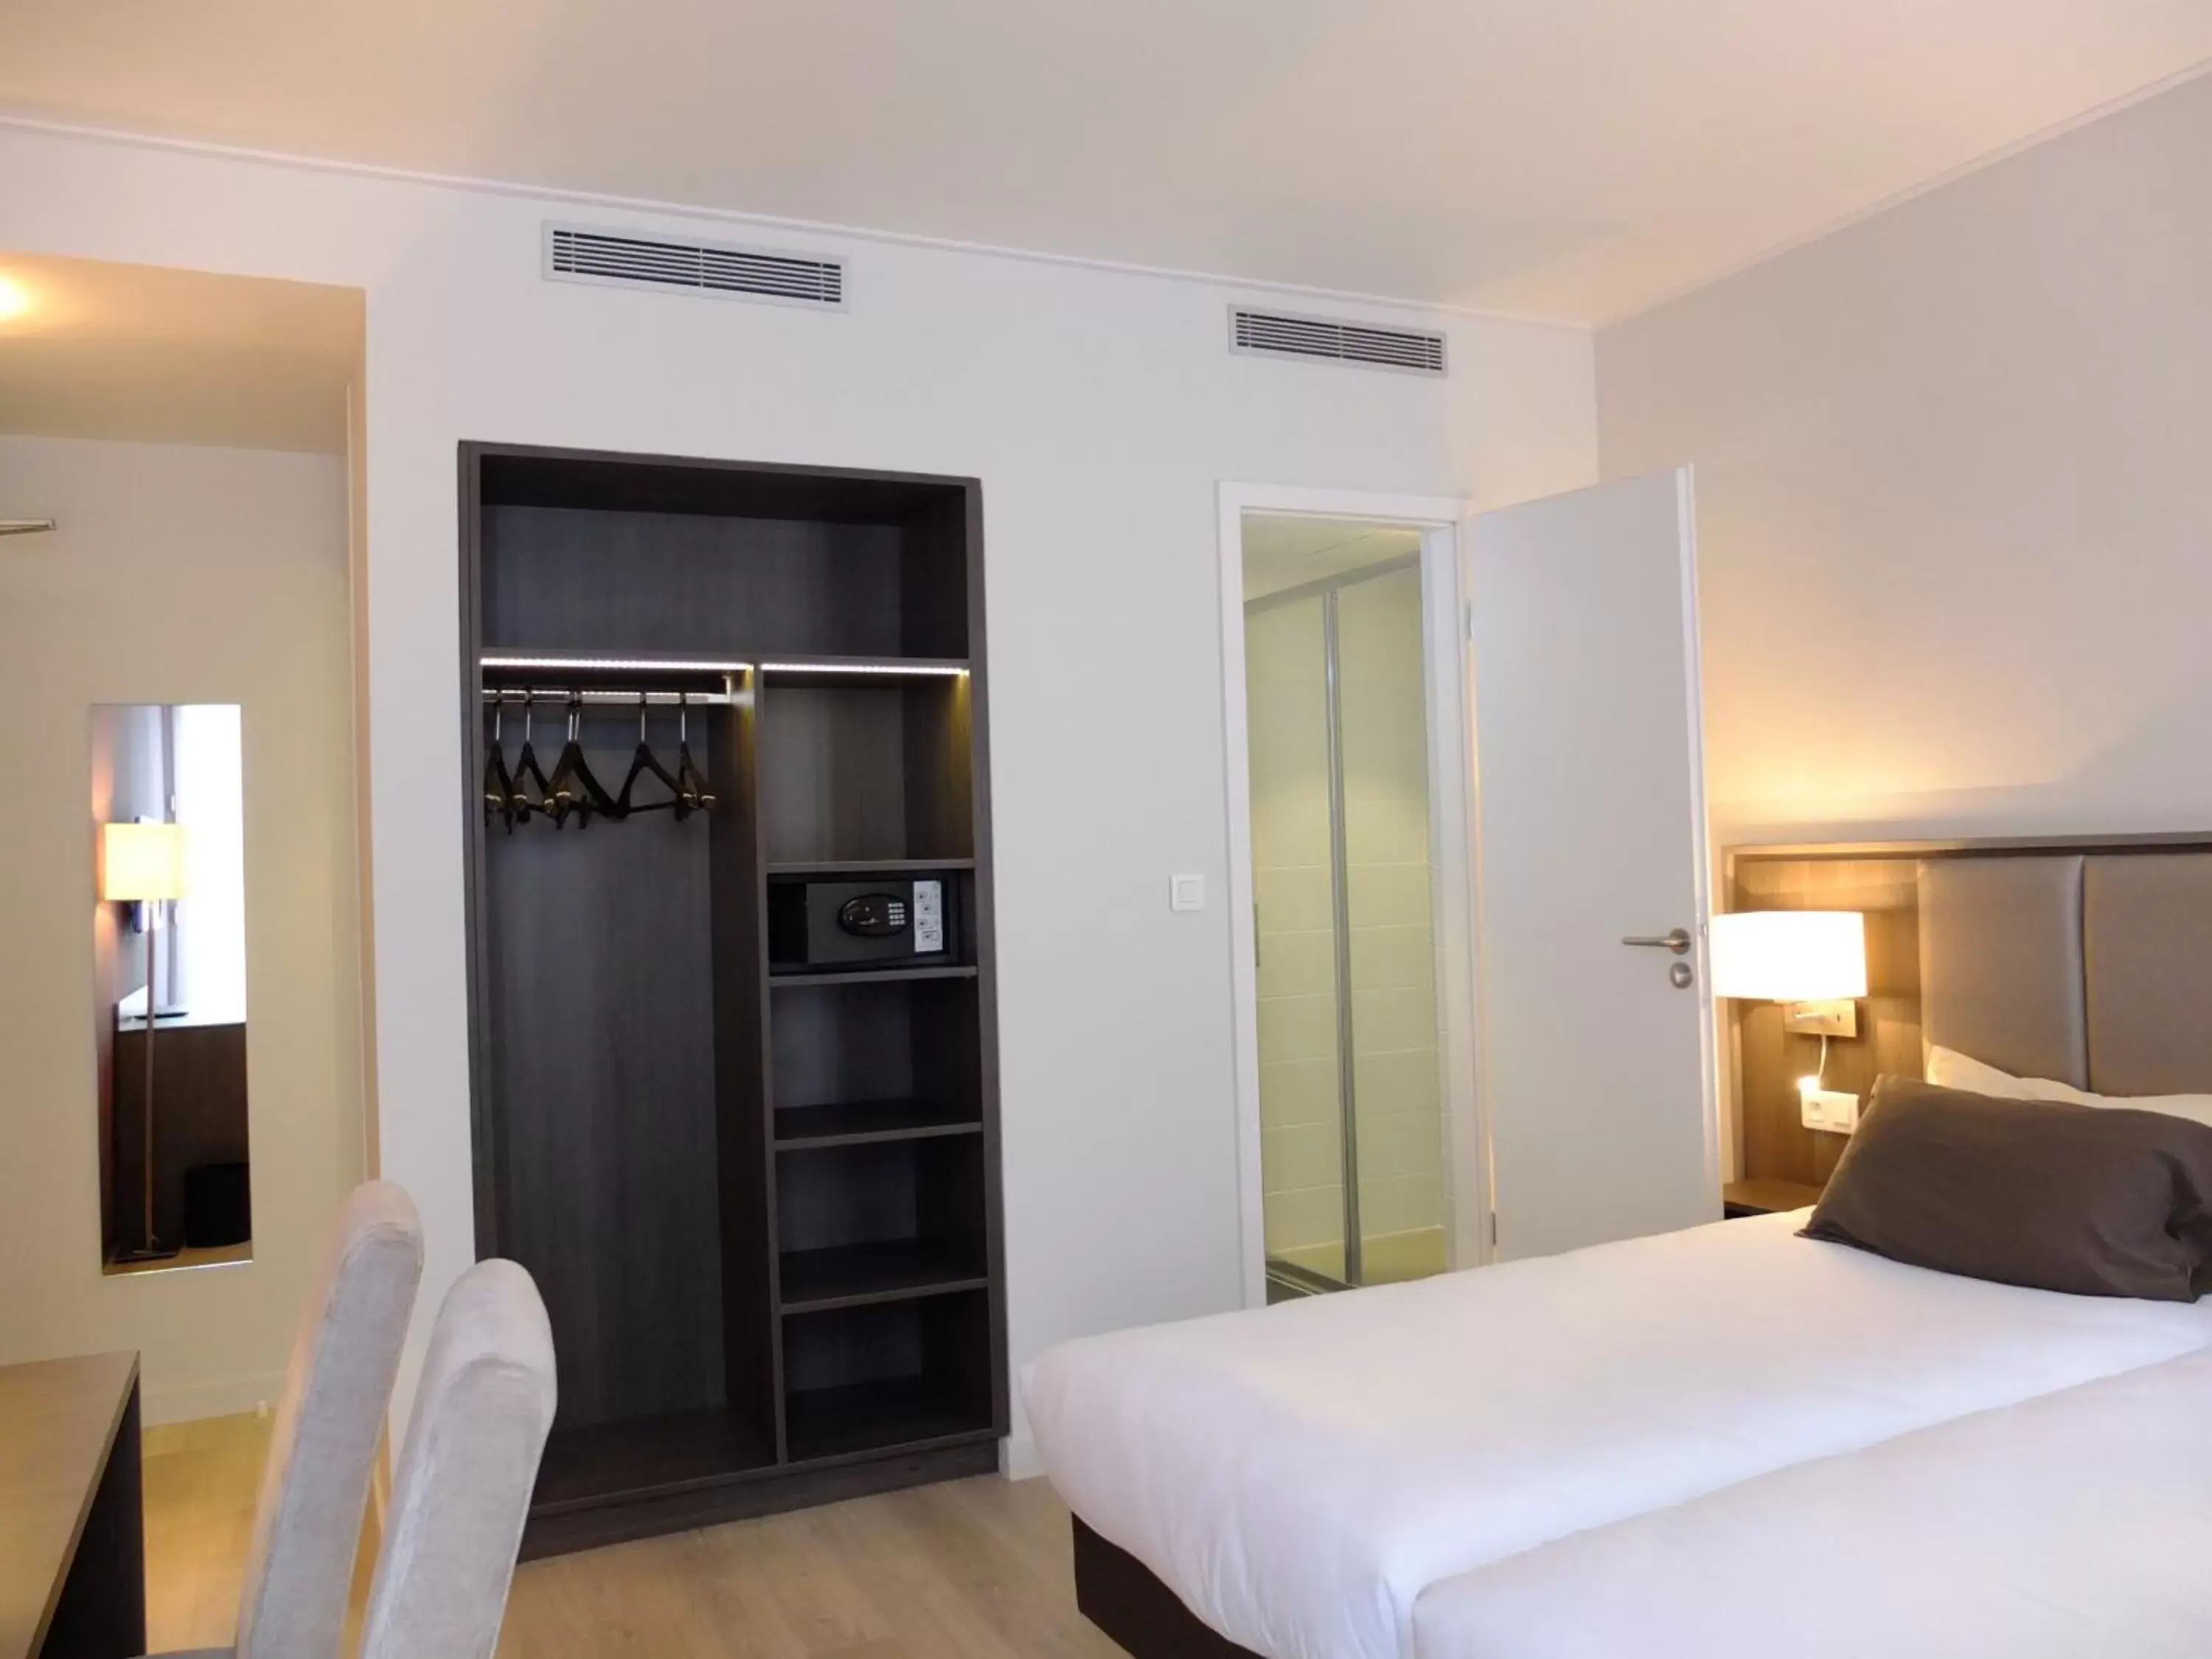 Bed, Room Photo in Hotel de Flore